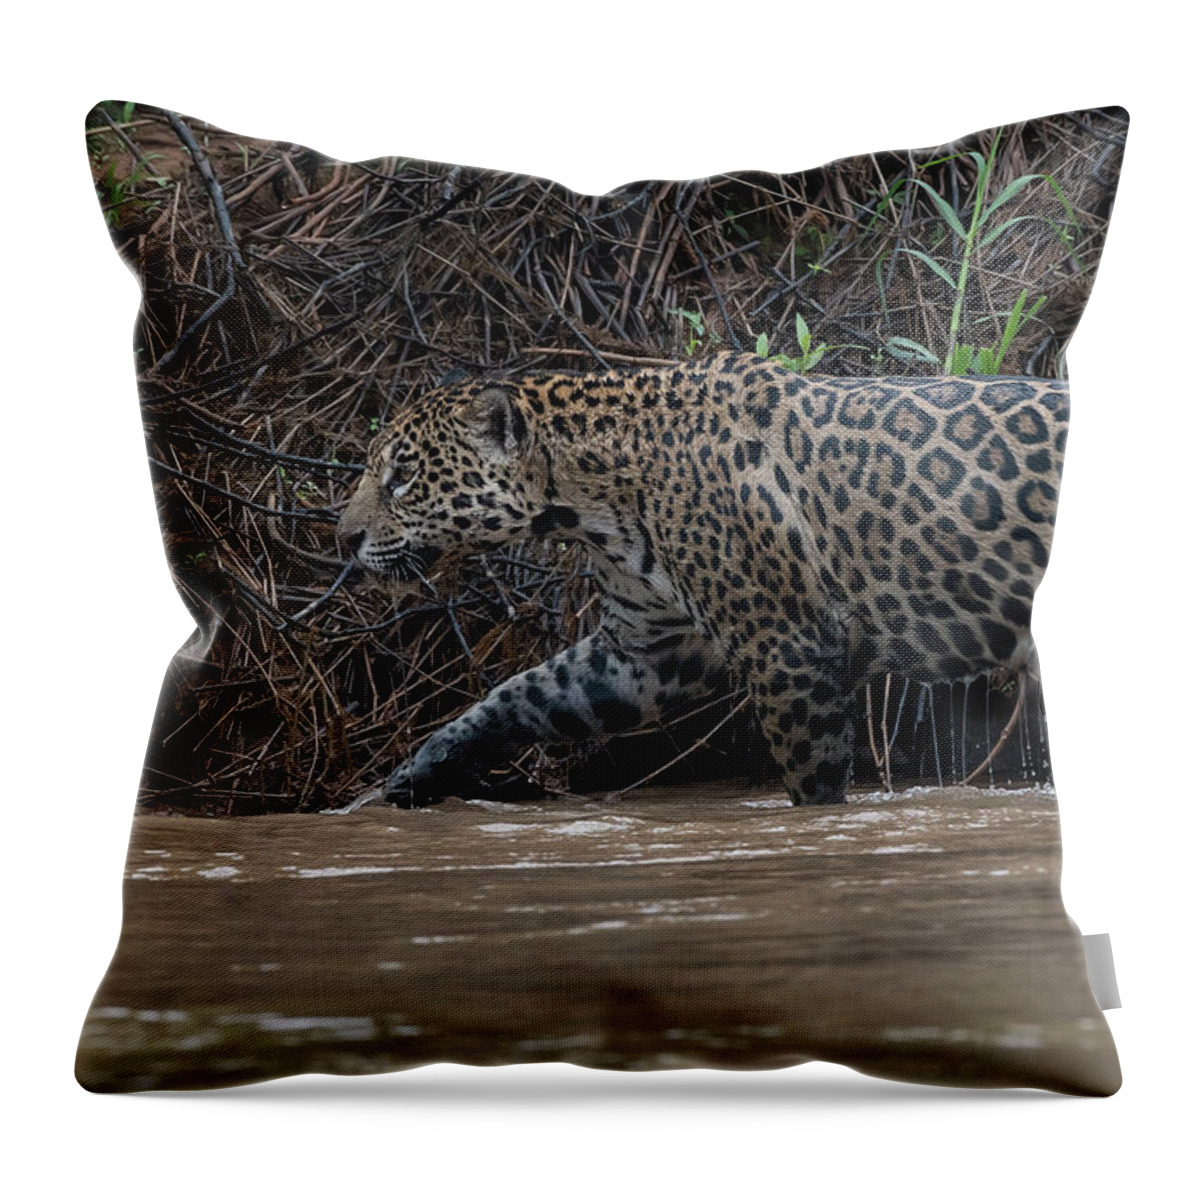 River Throw Pillow featuring the photograph Jaguar in River by Wade Aiken